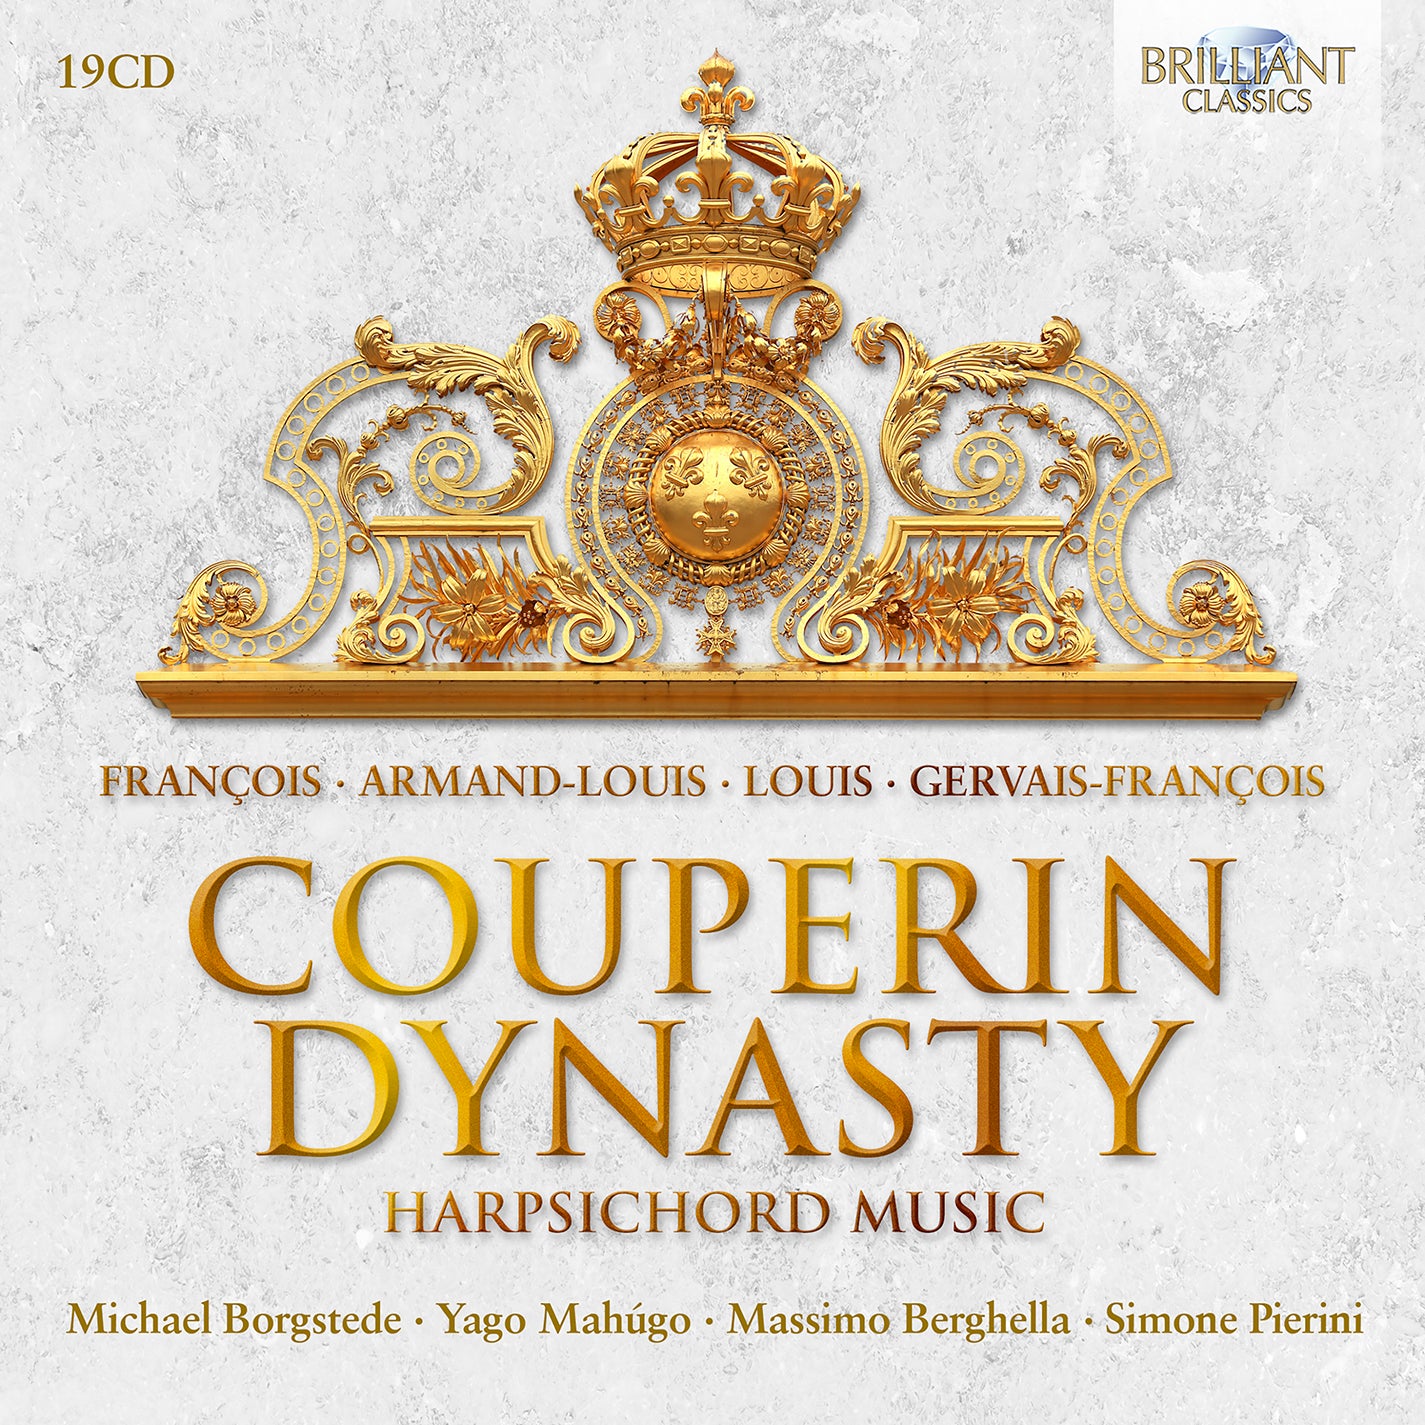 Couperin Dynasty